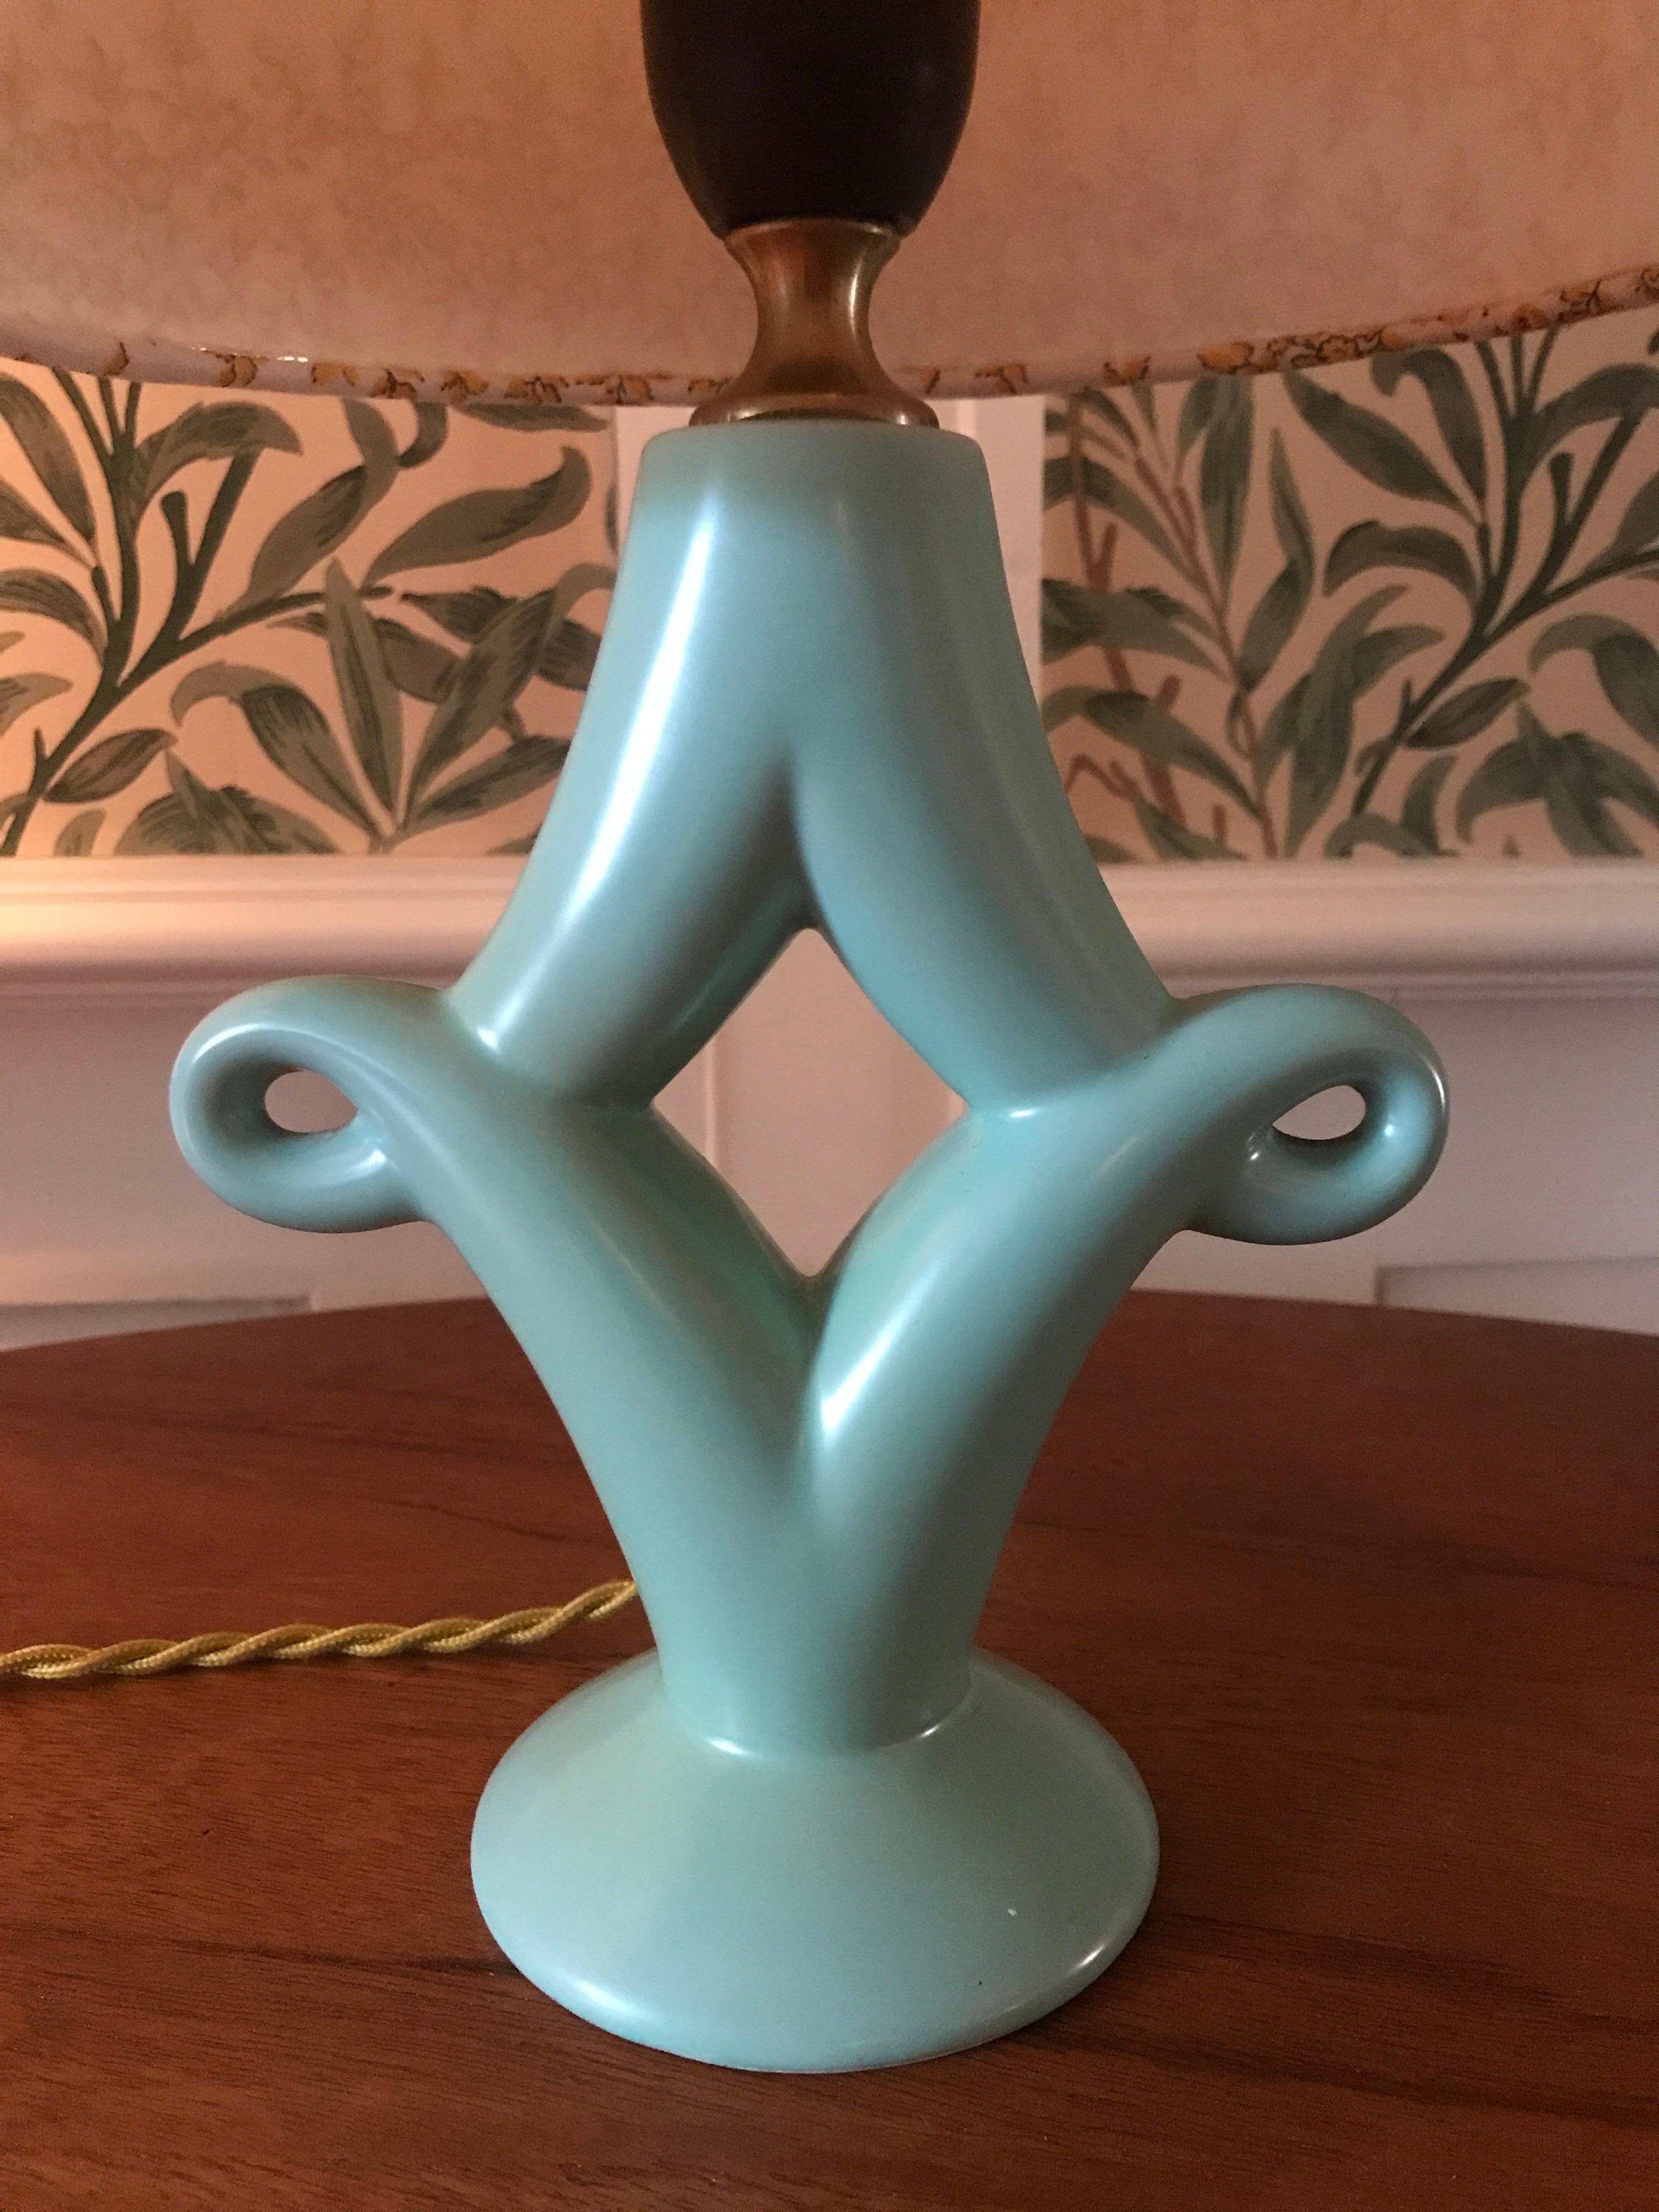 Ceramic table lamp in celadon green. New lampshade.